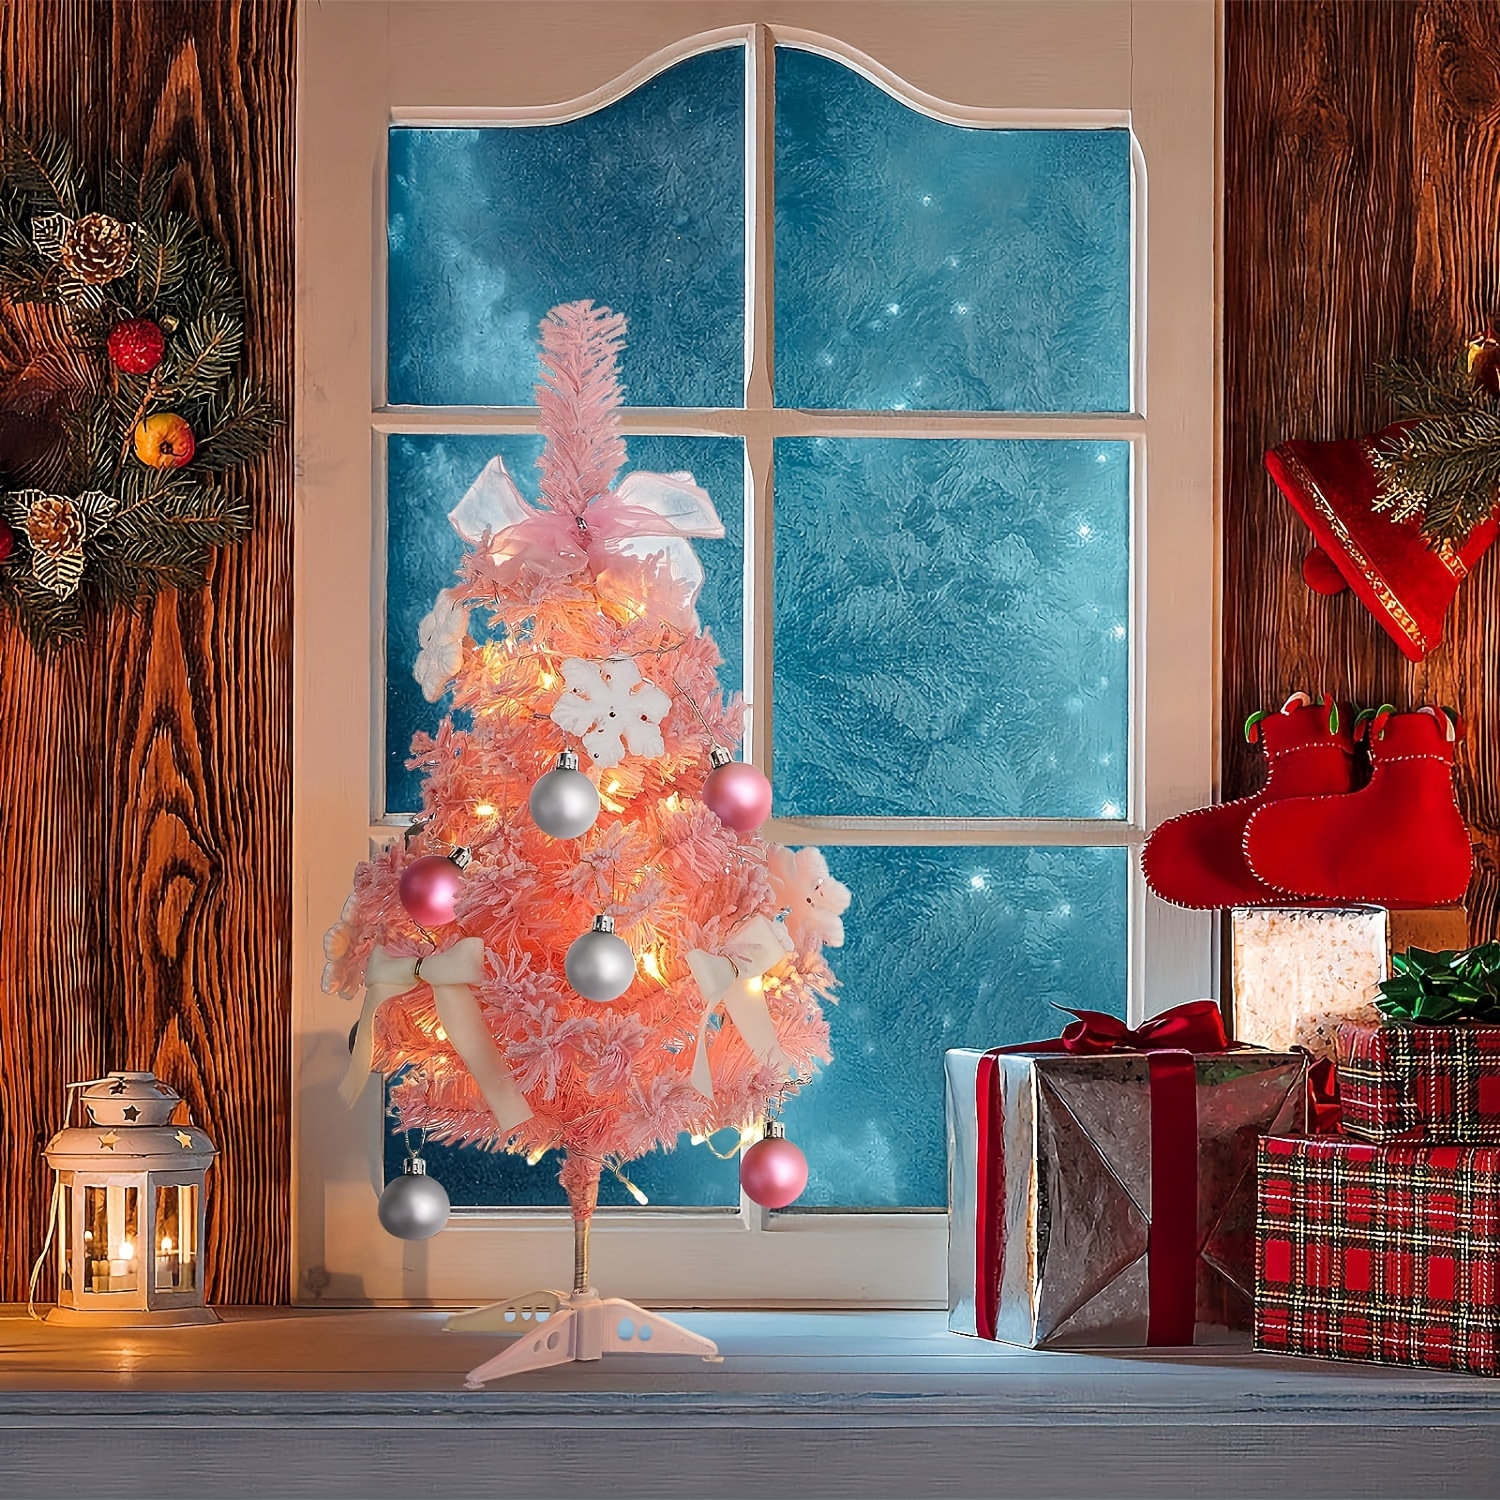 180 cm ✨ クリスマスツリー 屋内 屋外 装飾品 北欧風 クリスマス-